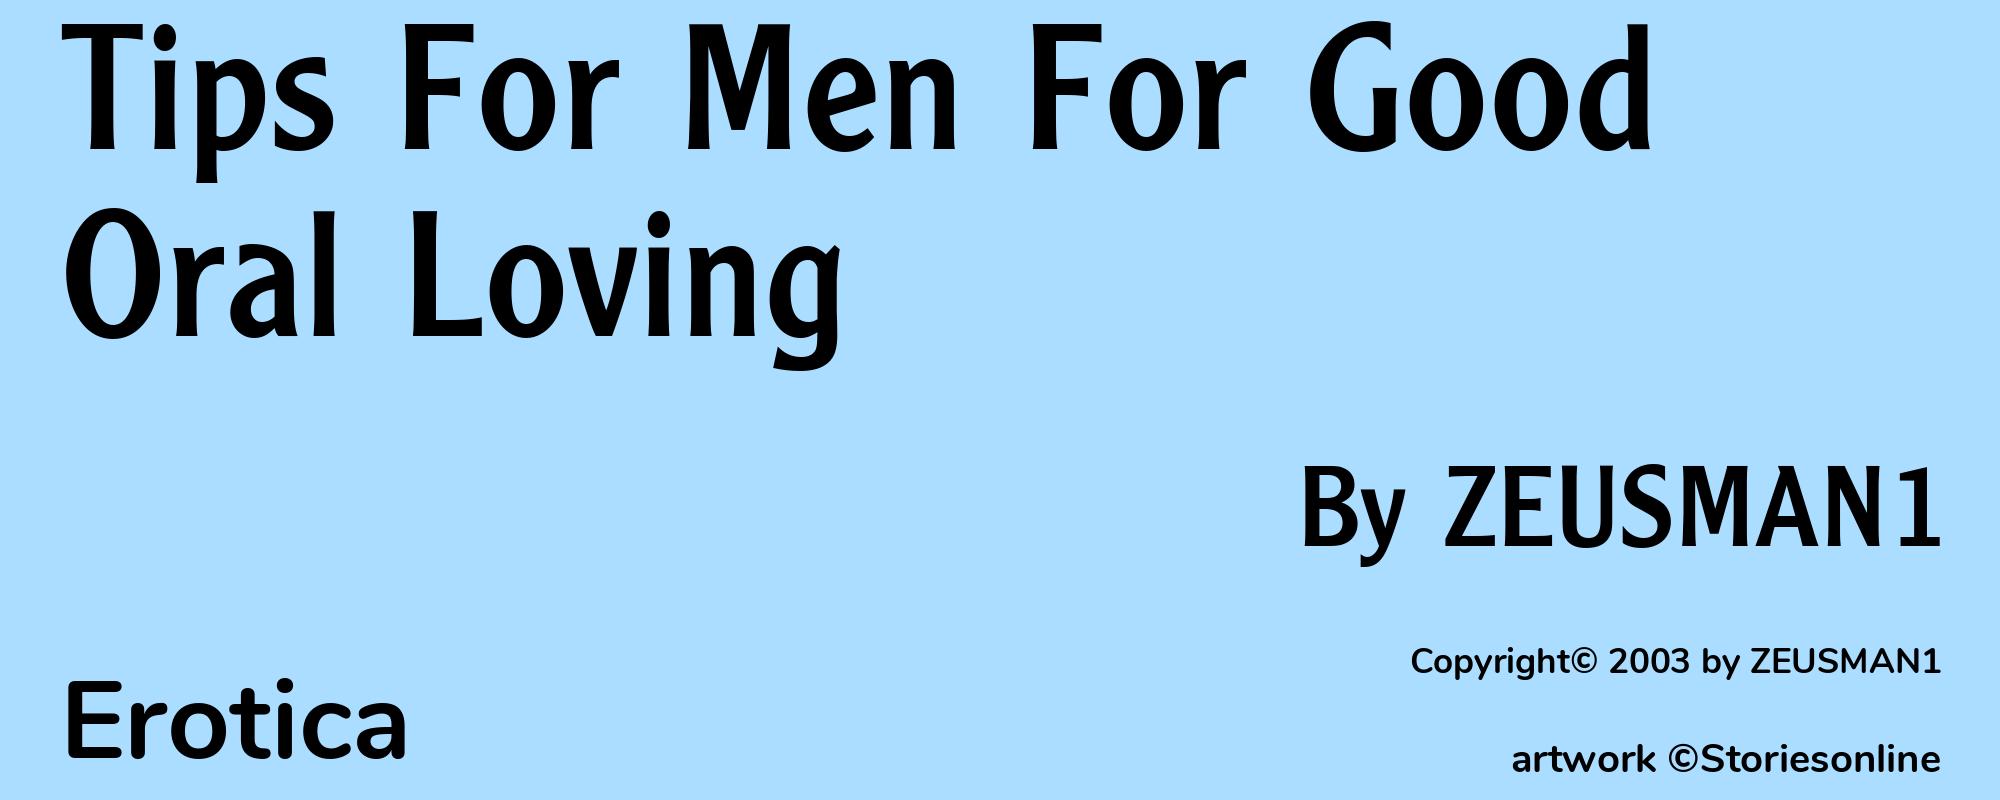 Tips For Men For Good Oral Loving - Cover